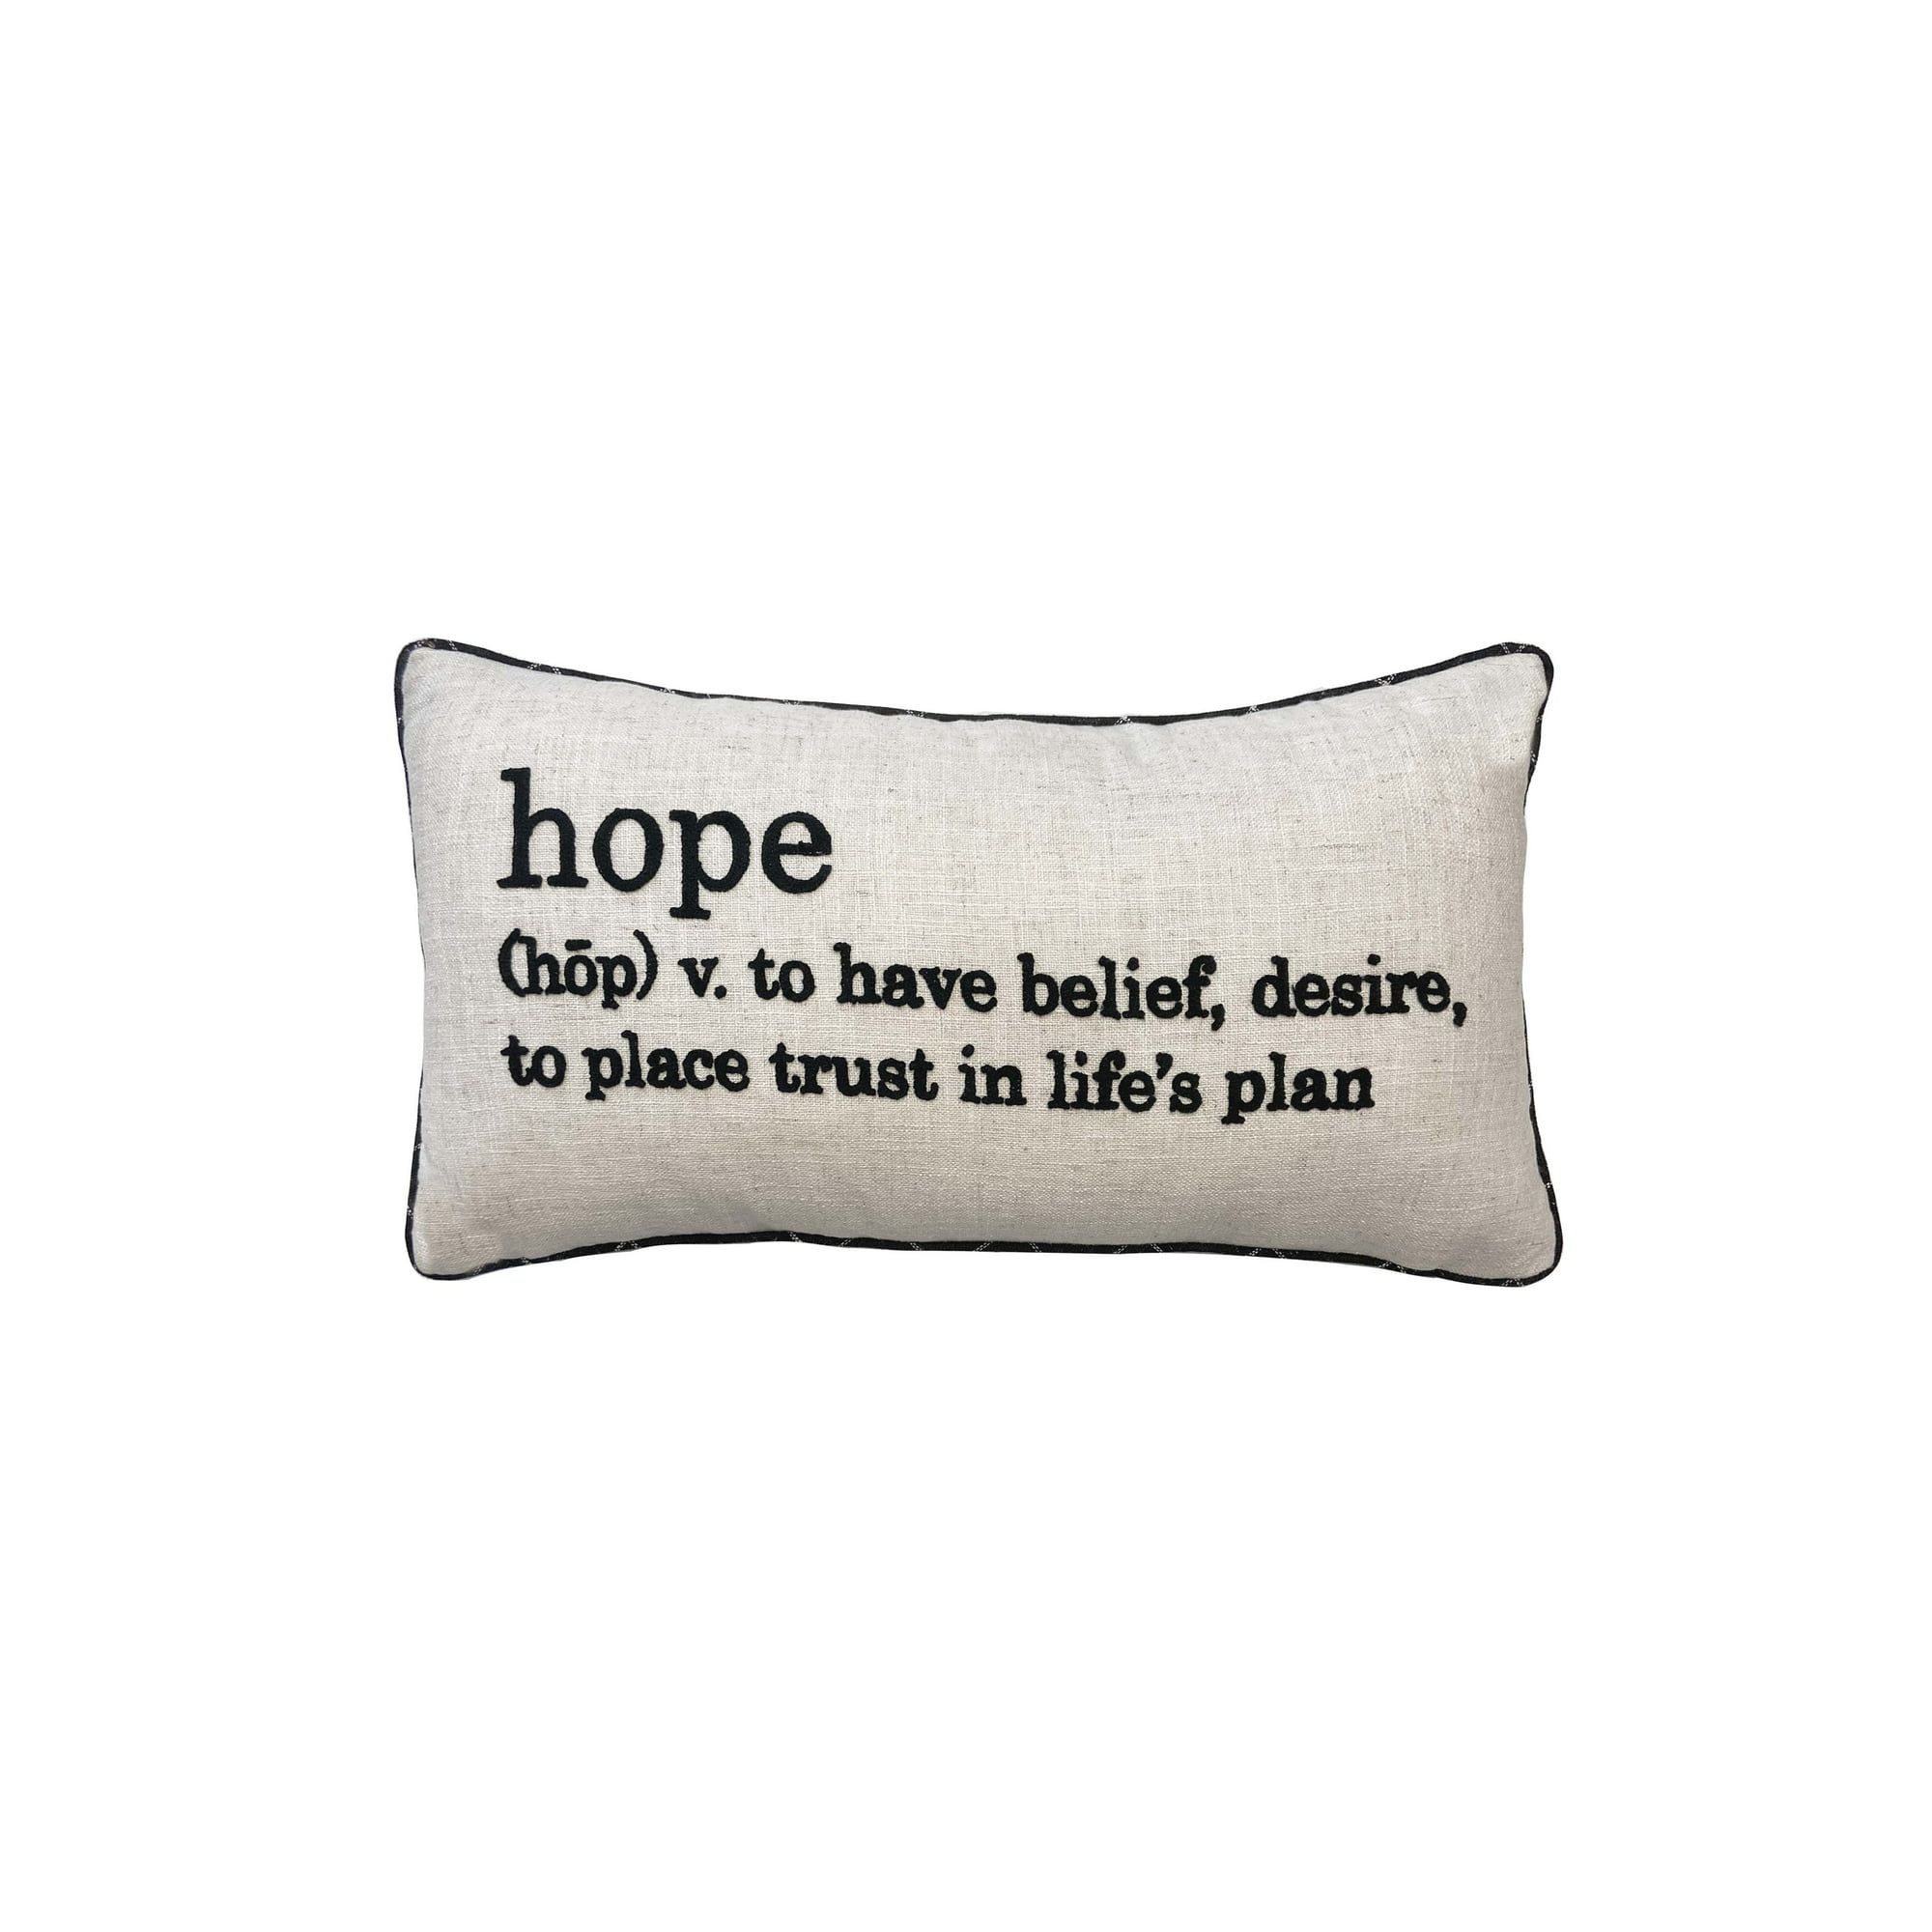 Mainstays Decorative Throw Pillow, Hope, Oblong, Ivory/black, 12''x22'', 1Pack | Walmart (US)